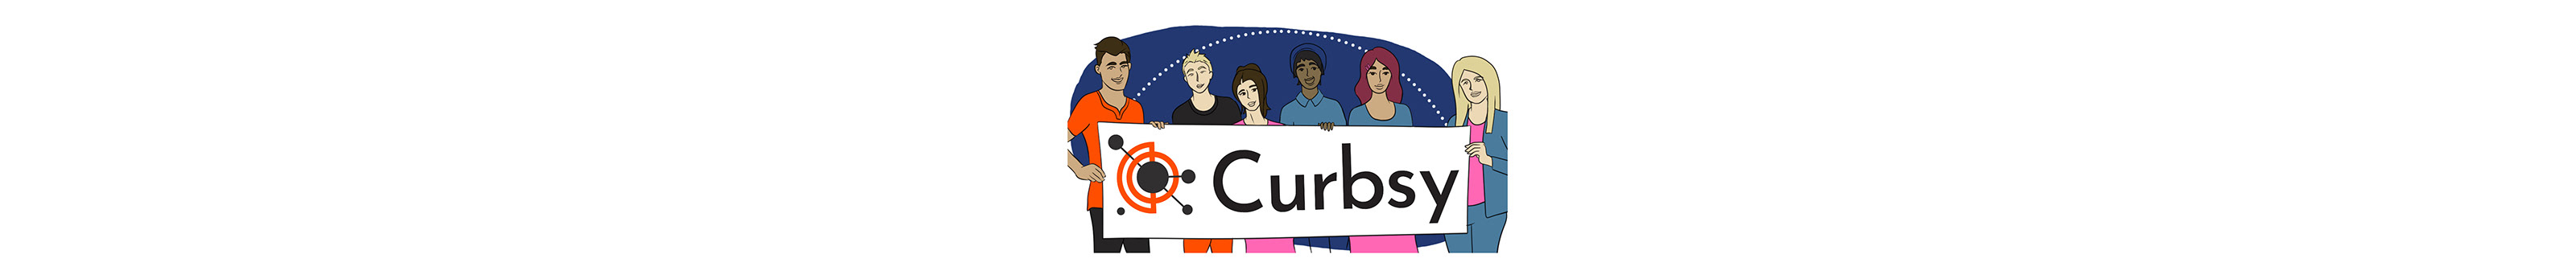 Curbsy Ltd.'s profile banner